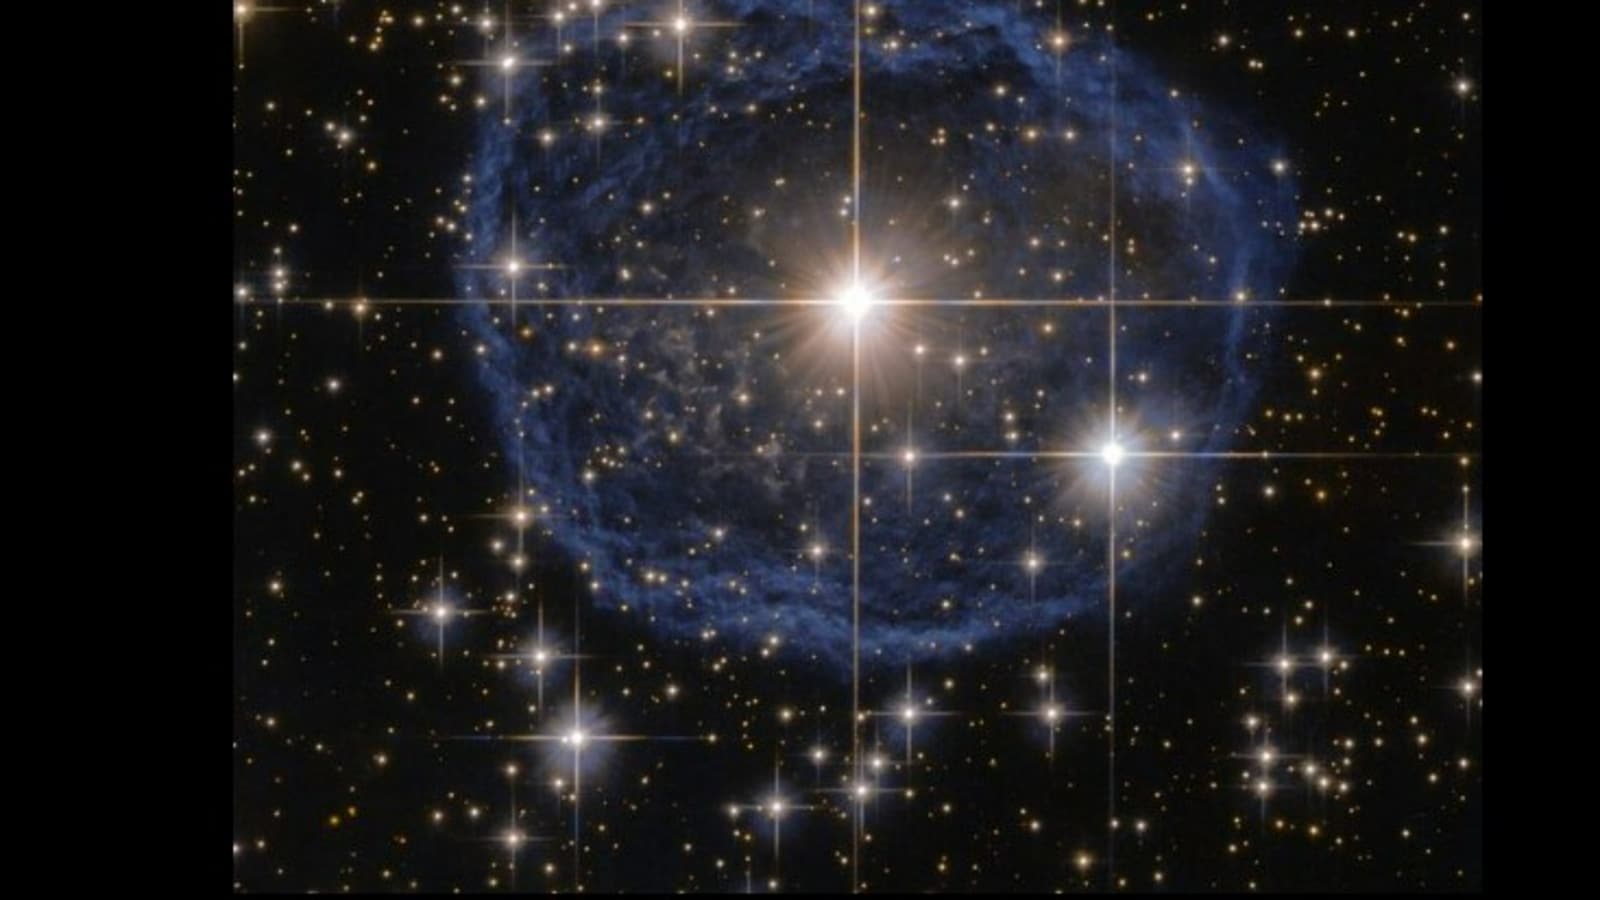 Ever heard of Wolf-Rayet nebula? A stunning 'blue bubble' captured by NASA's Hubble Space Telescope